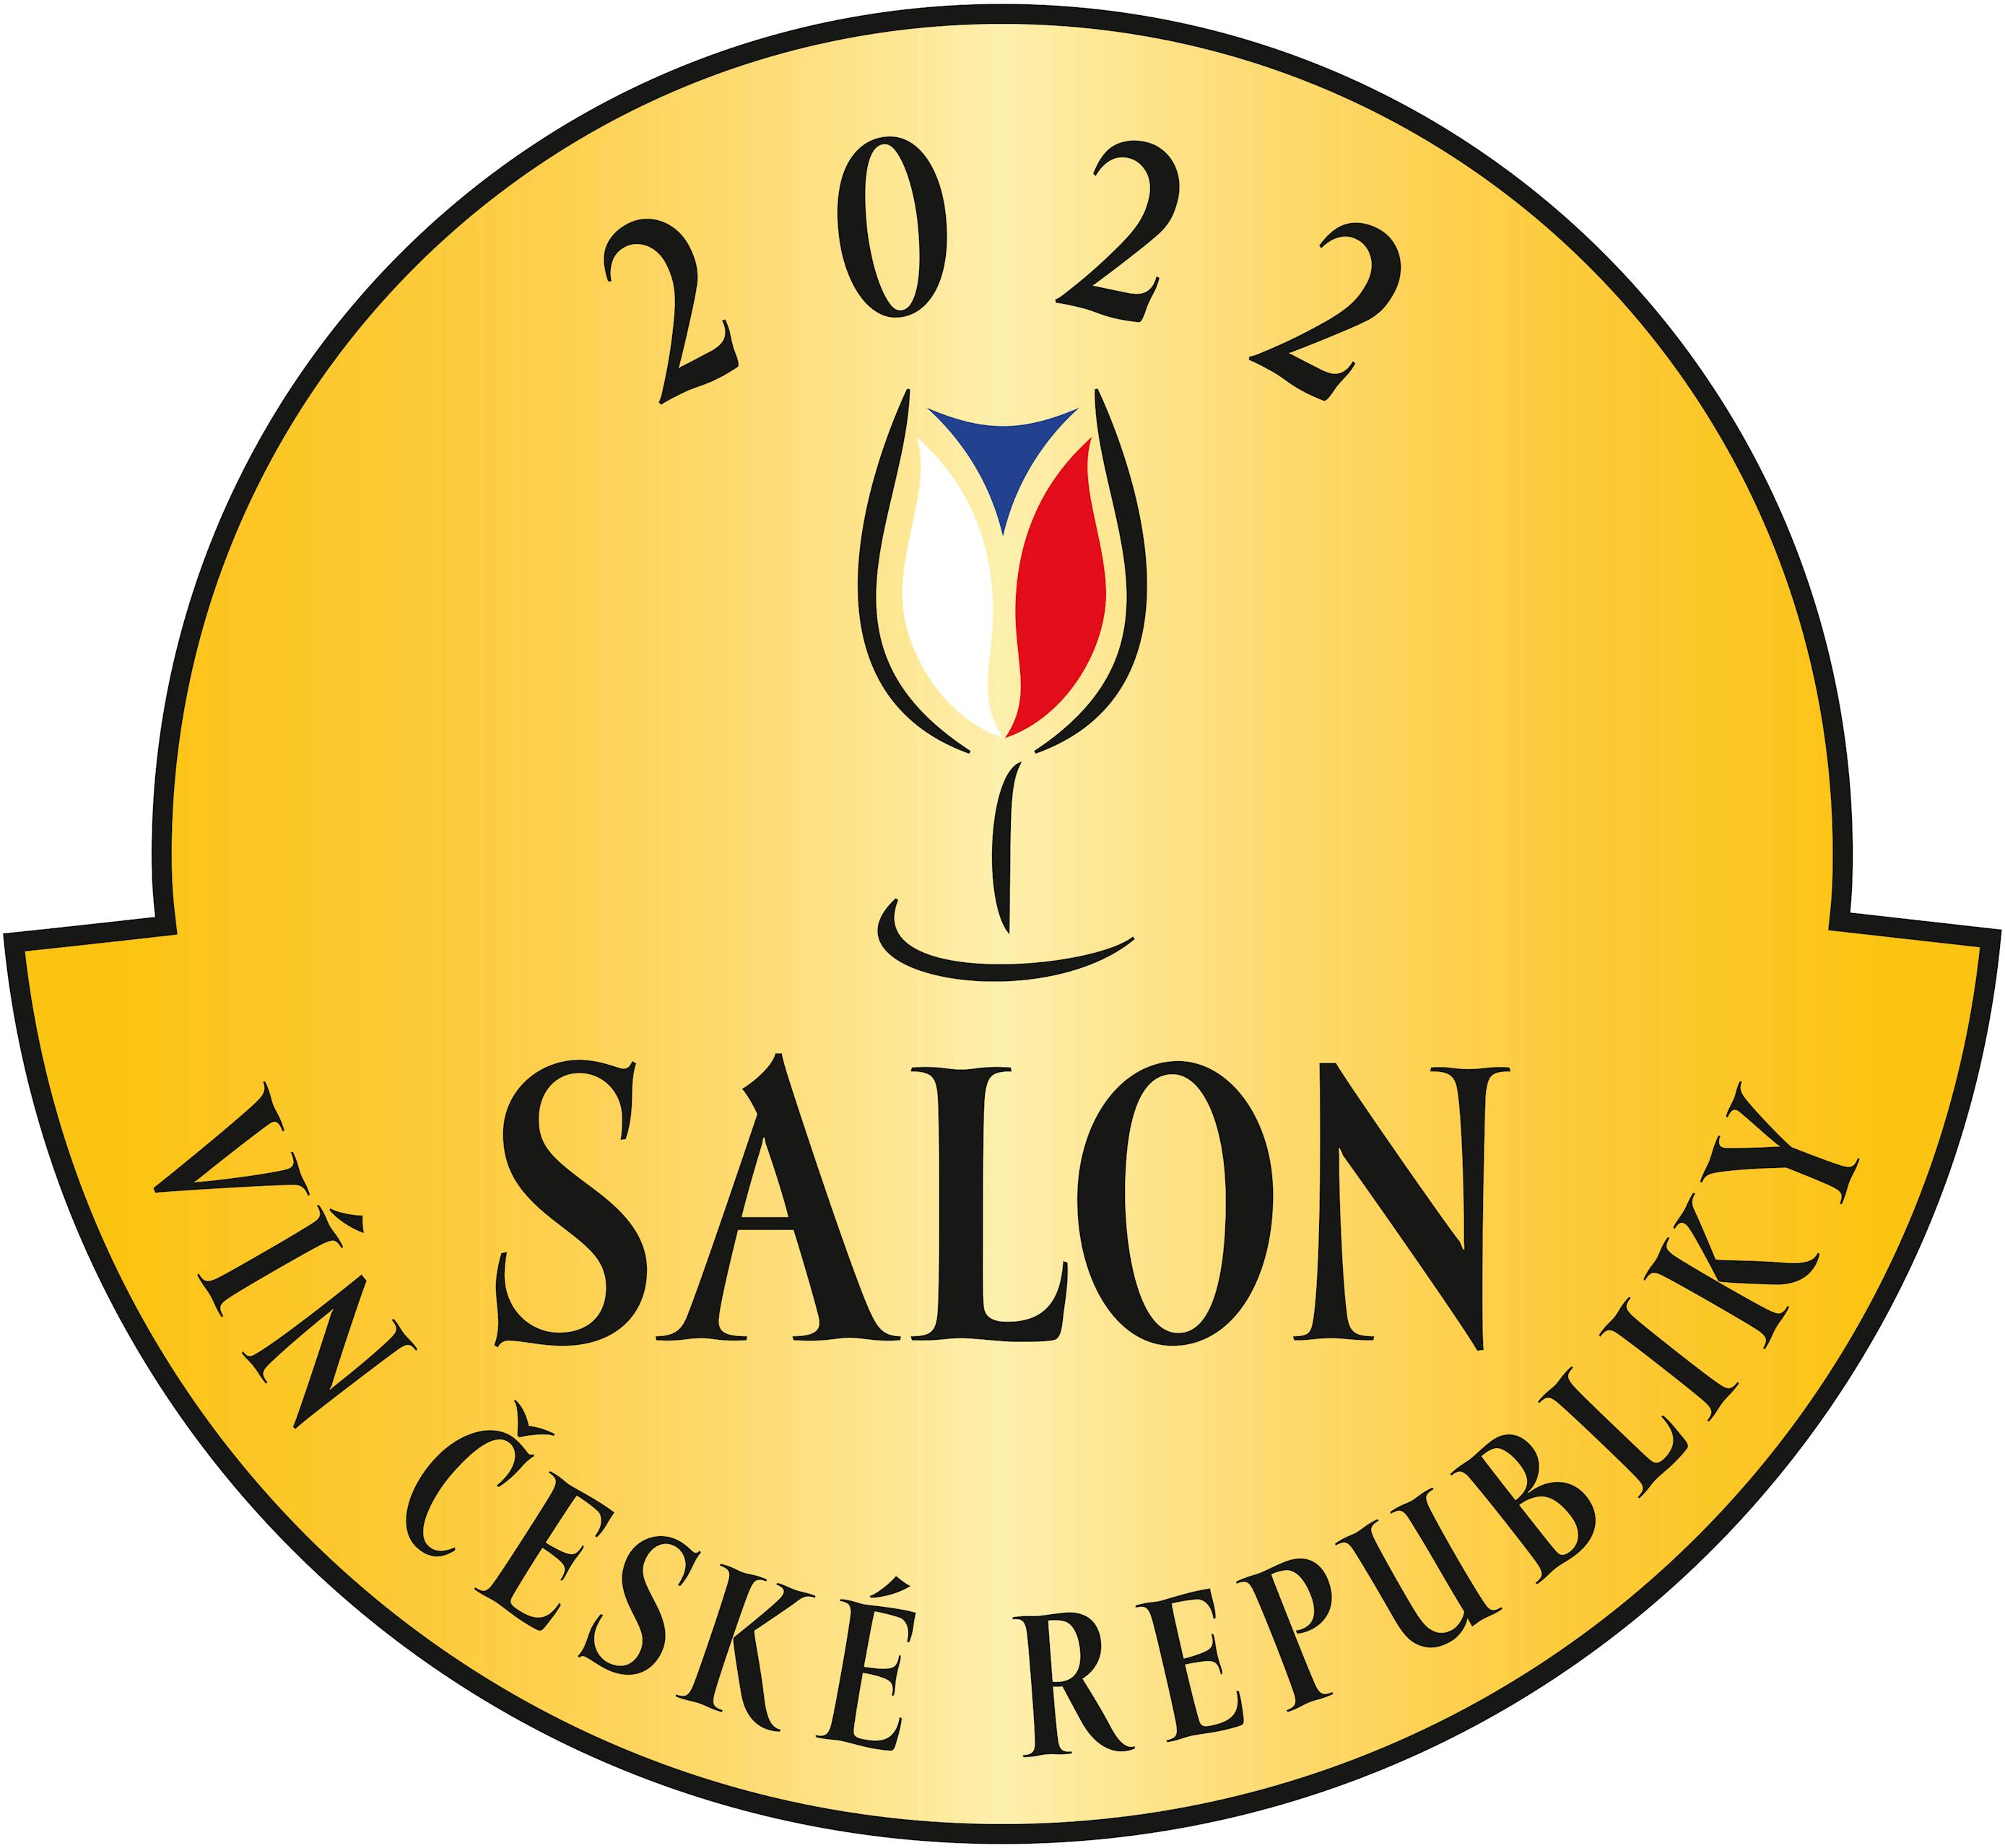 Salon 2022